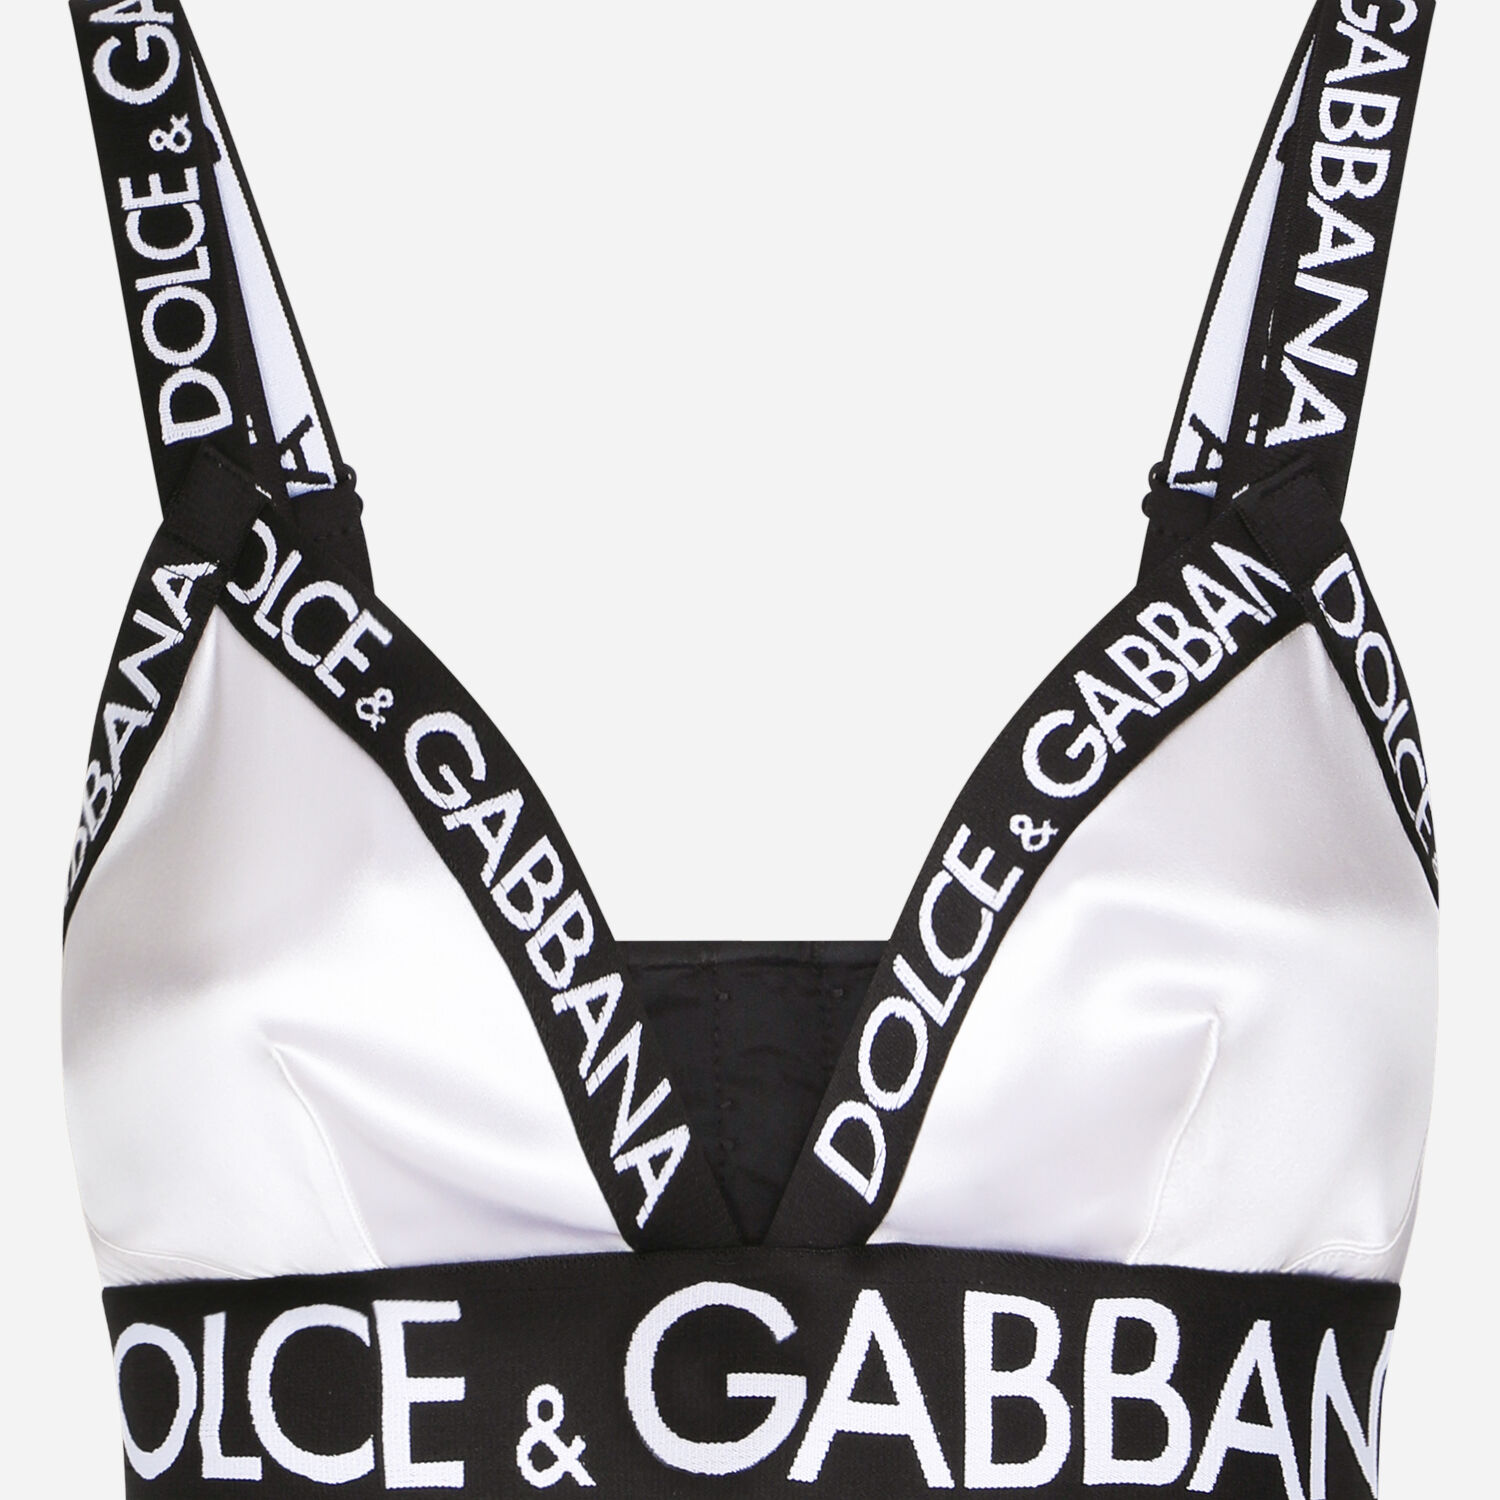 Dolce&Gabbana Branded Elastic Sports Bra - Bergdorf Goodman